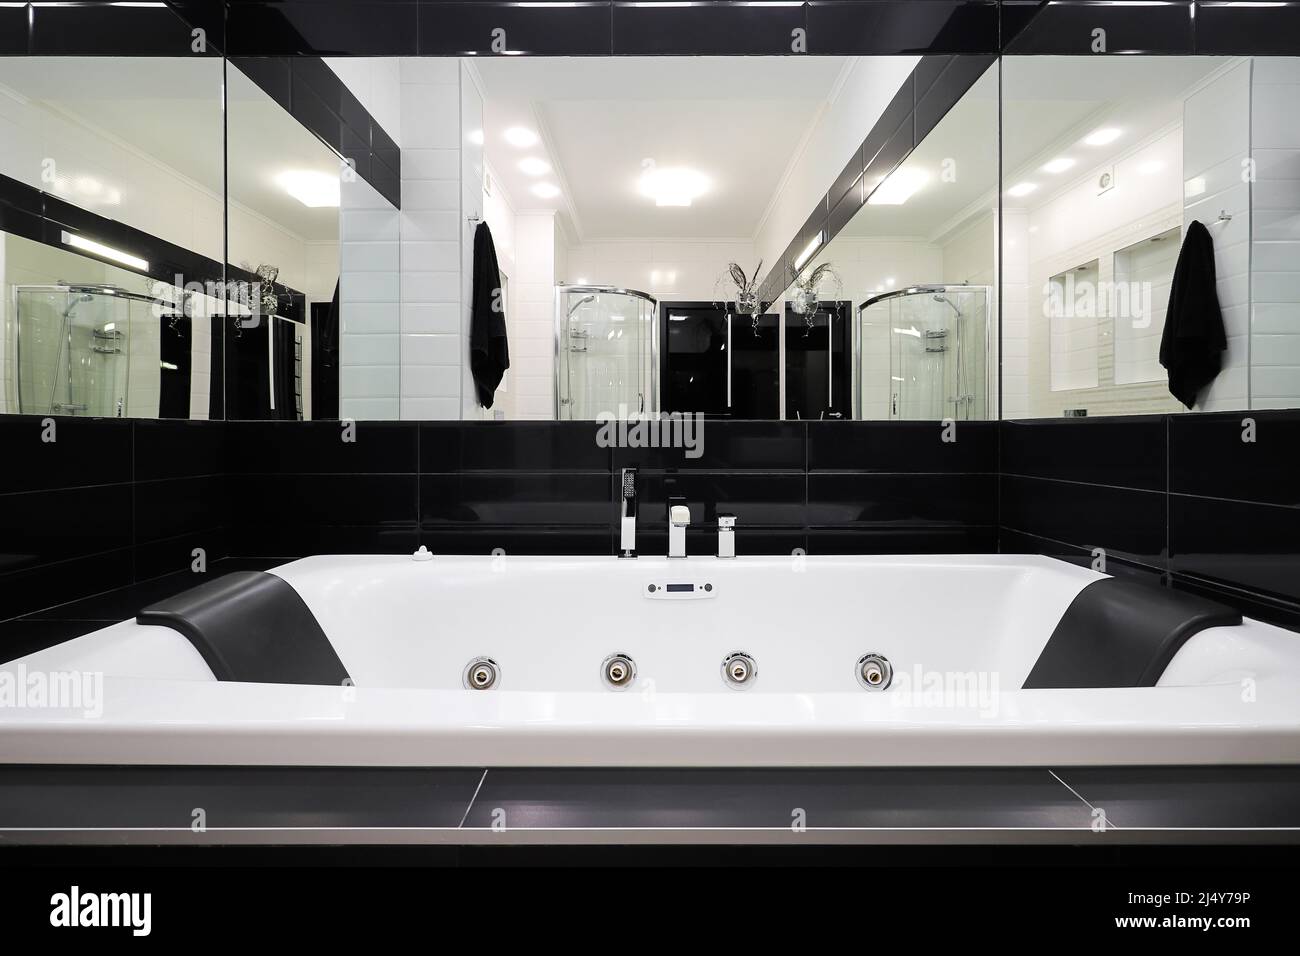 White jacuzzi tub in modern bathroom interior Stock Photo